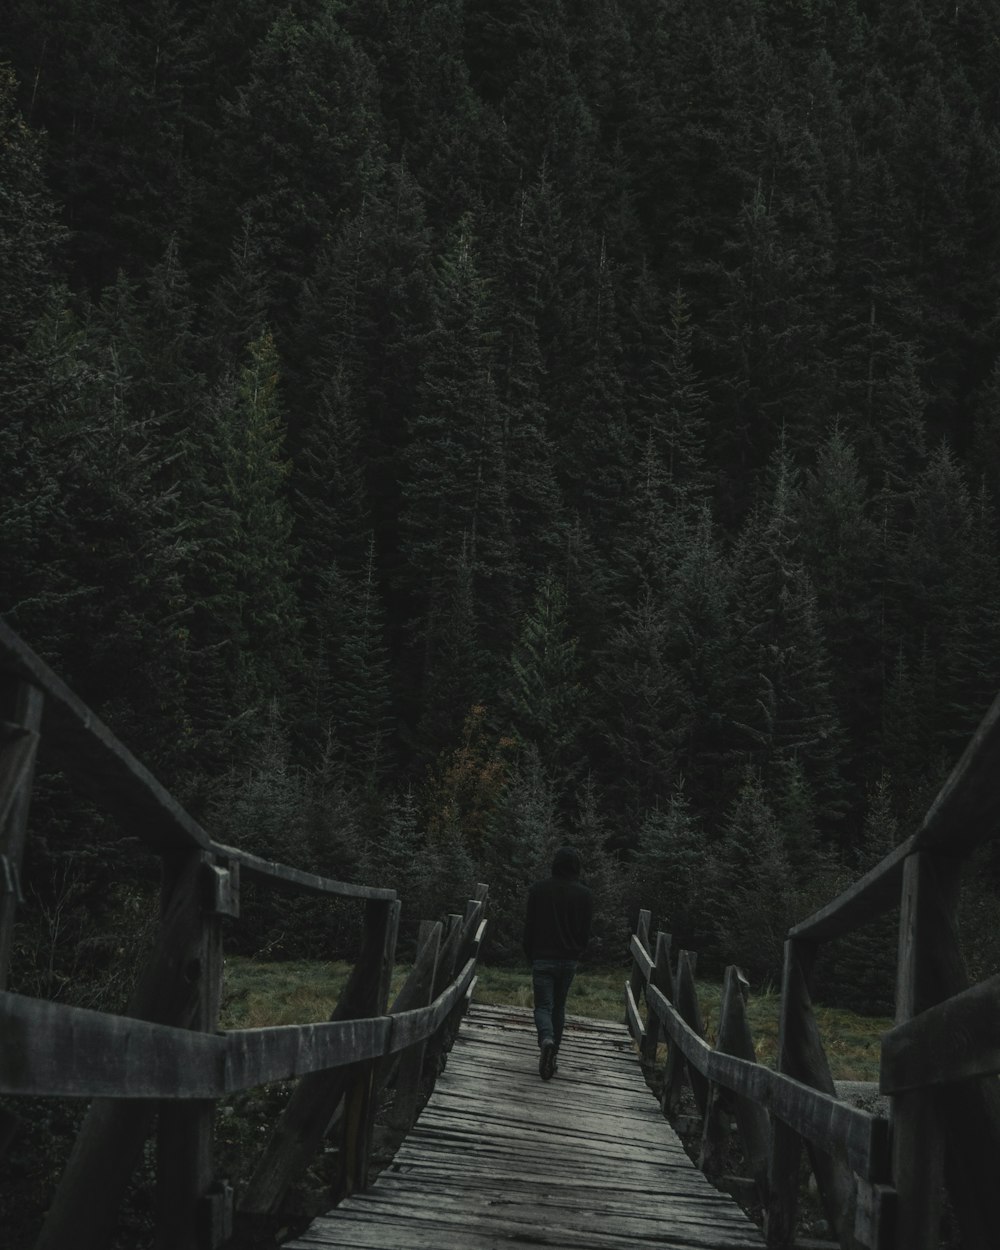 person walking on wooden bridge near pine trees during daytime